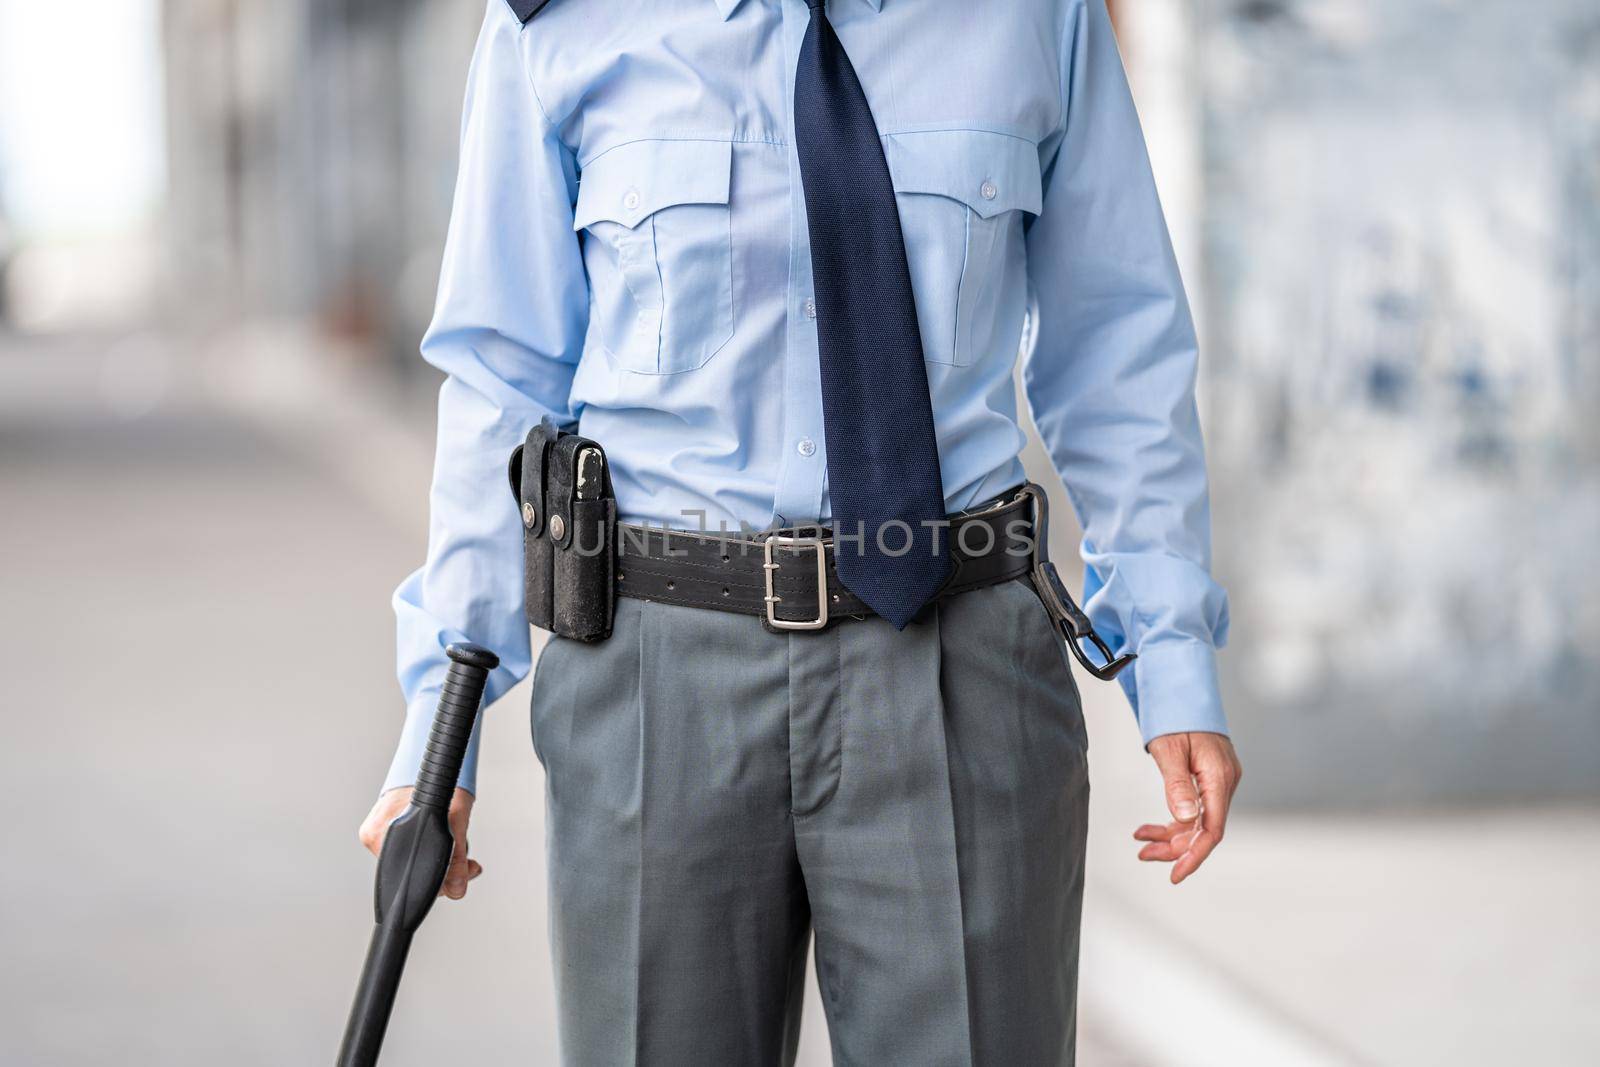 policeman with a baton on a city street.